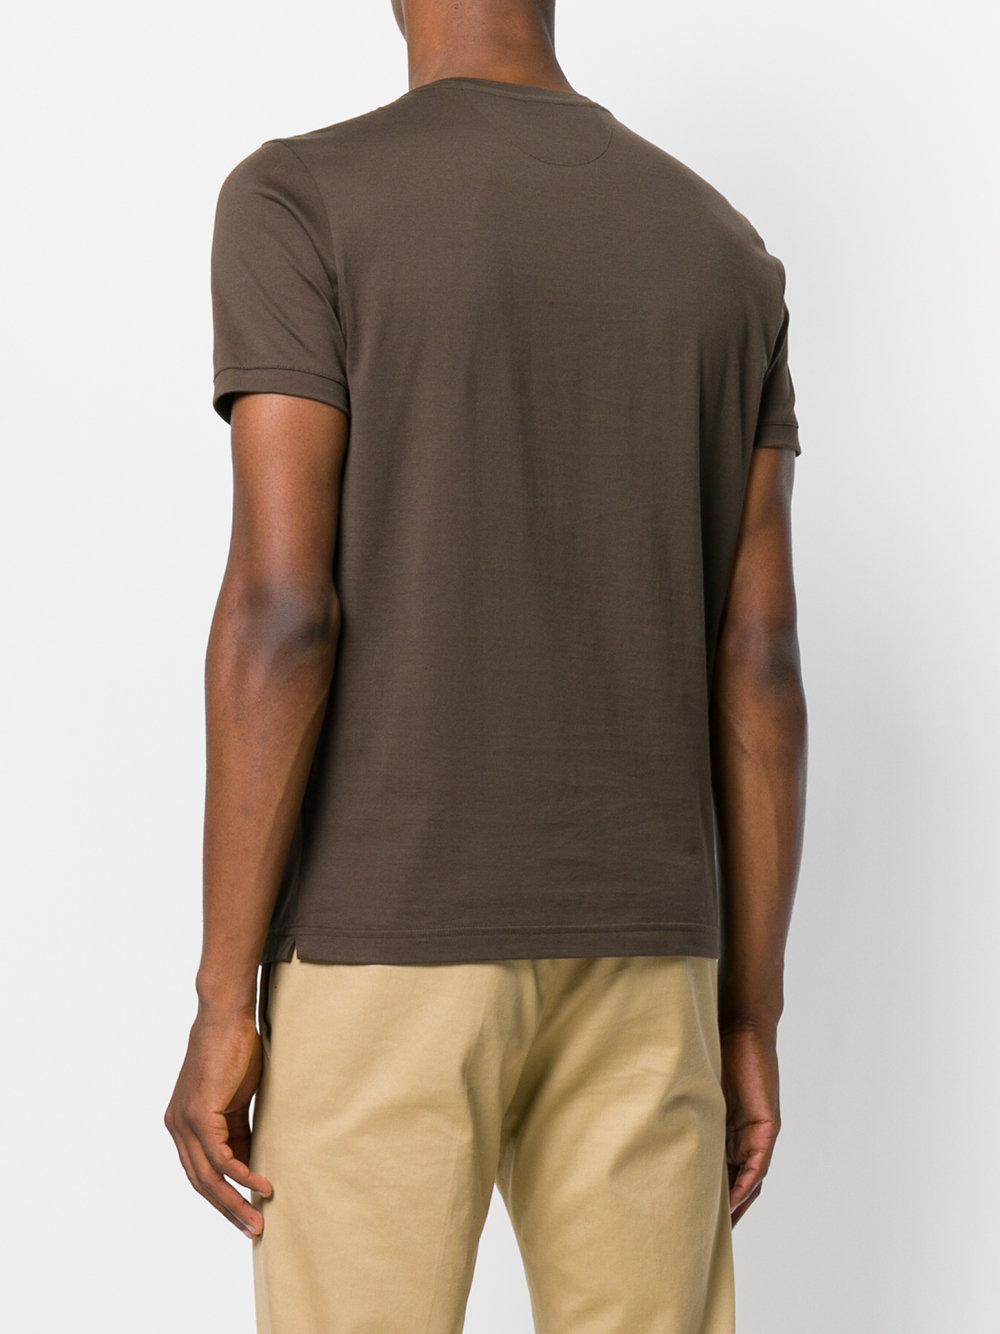 Fendi Cotton Ff Logo T-shirt in Brown for Men - Lyst